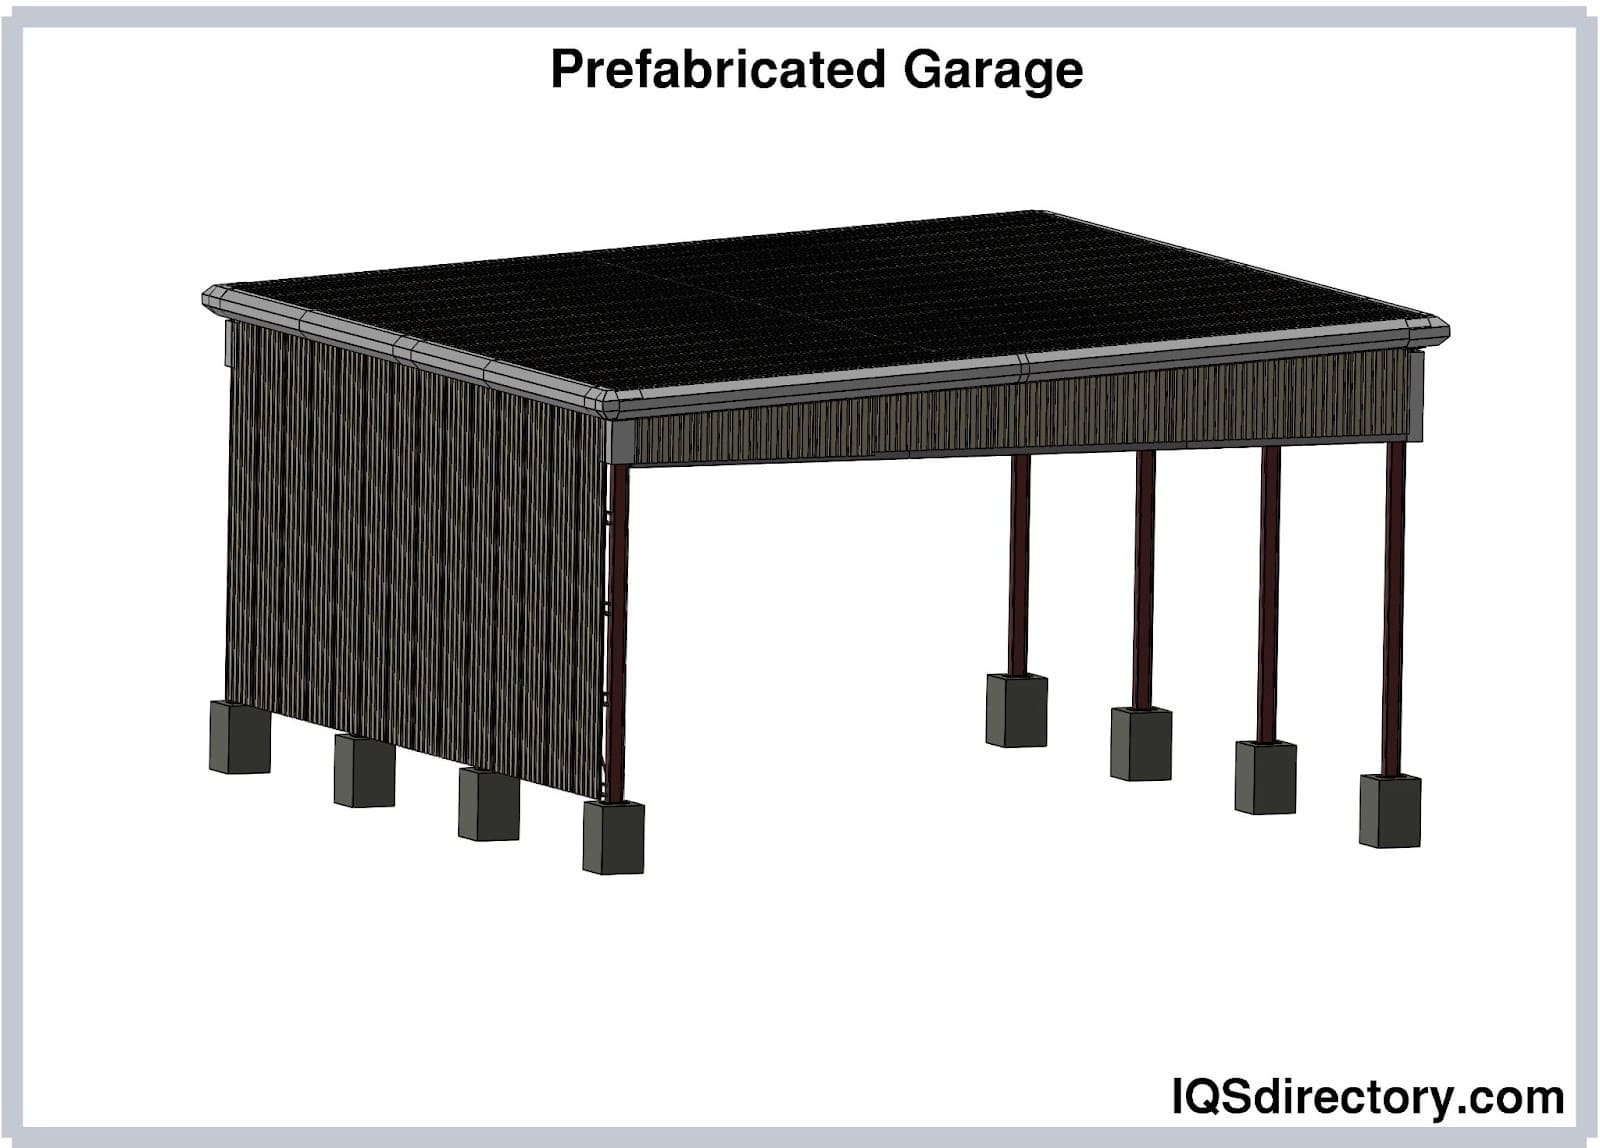 Prefabricated Garage